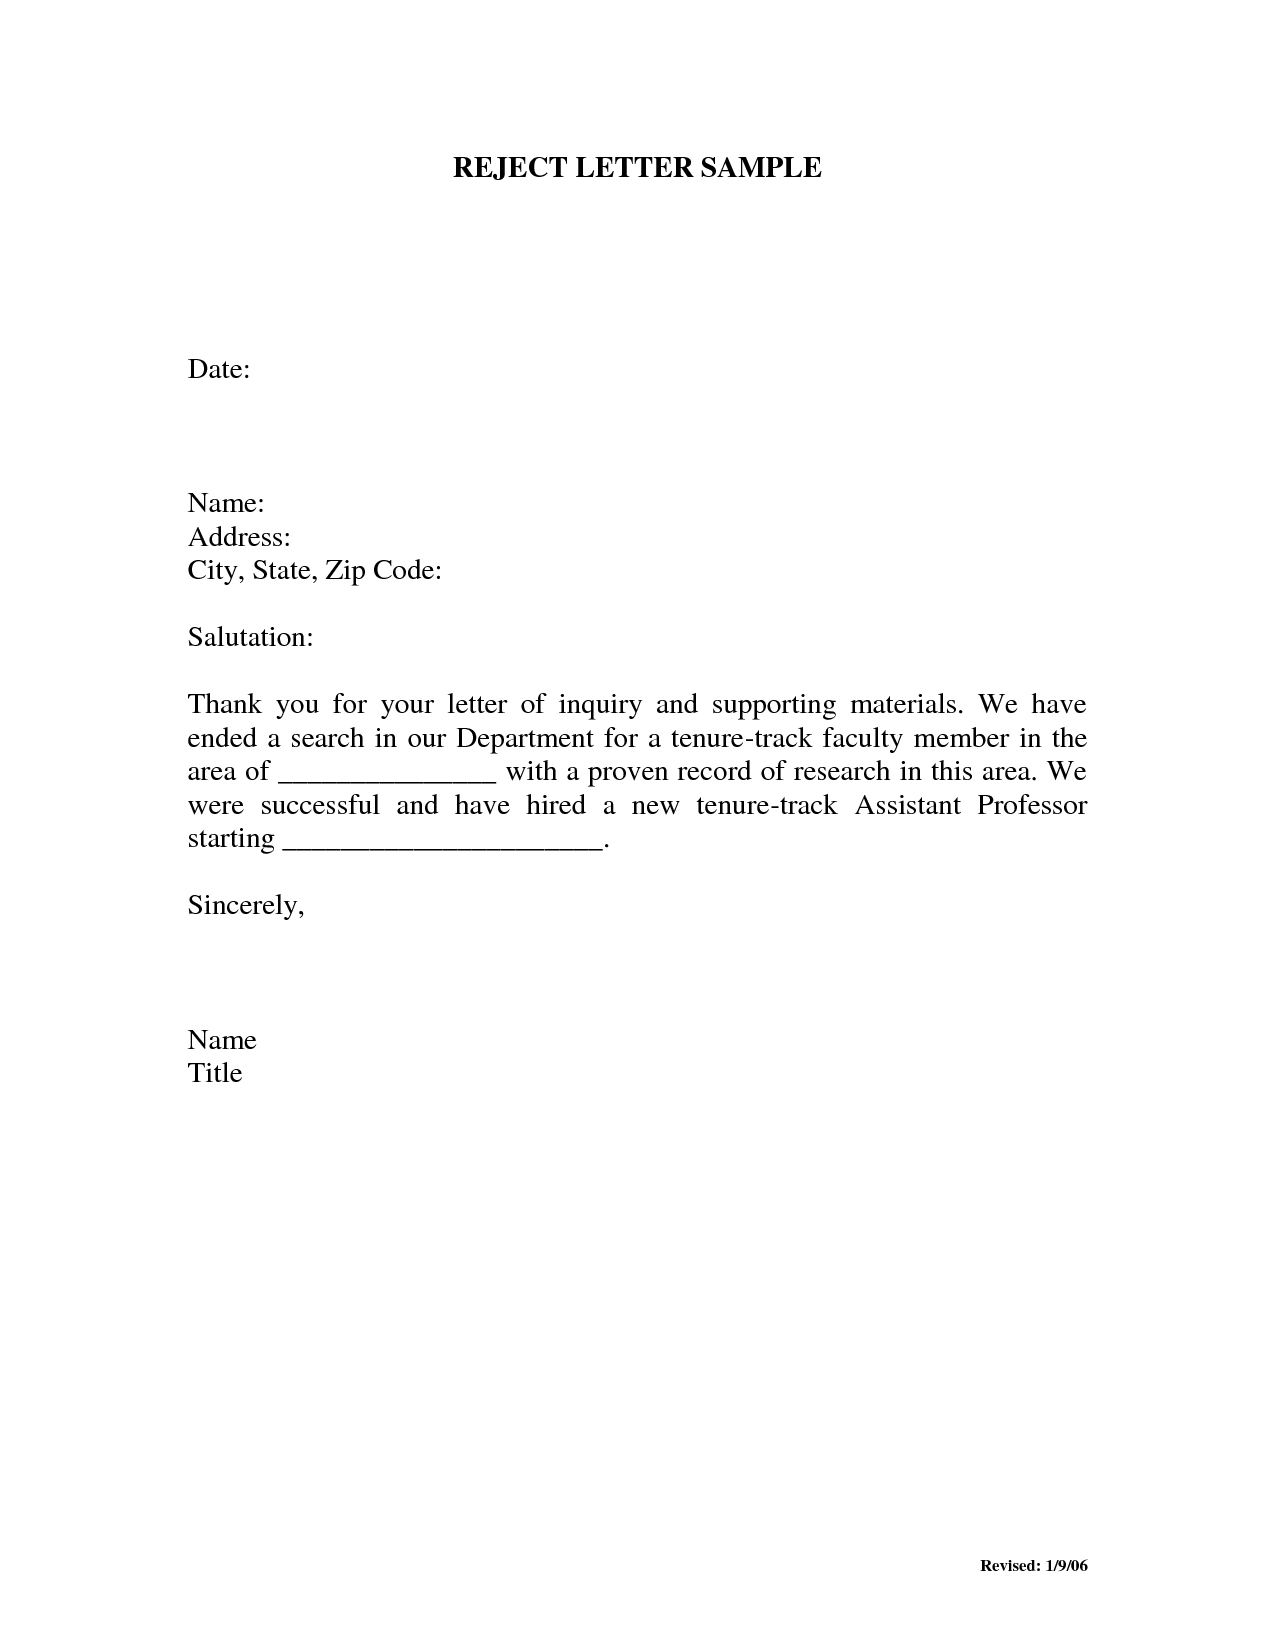 bid rejection letter sample motorhomes rent choice invoice rejection letter